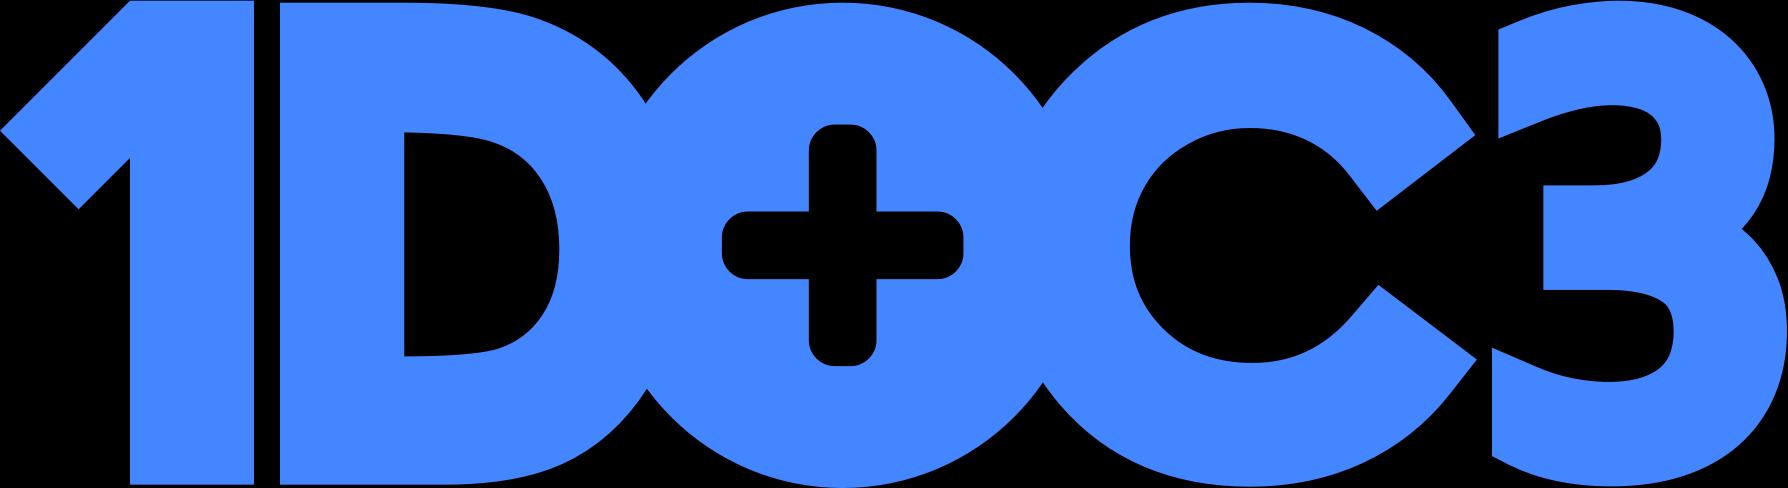 1Doc3_logo